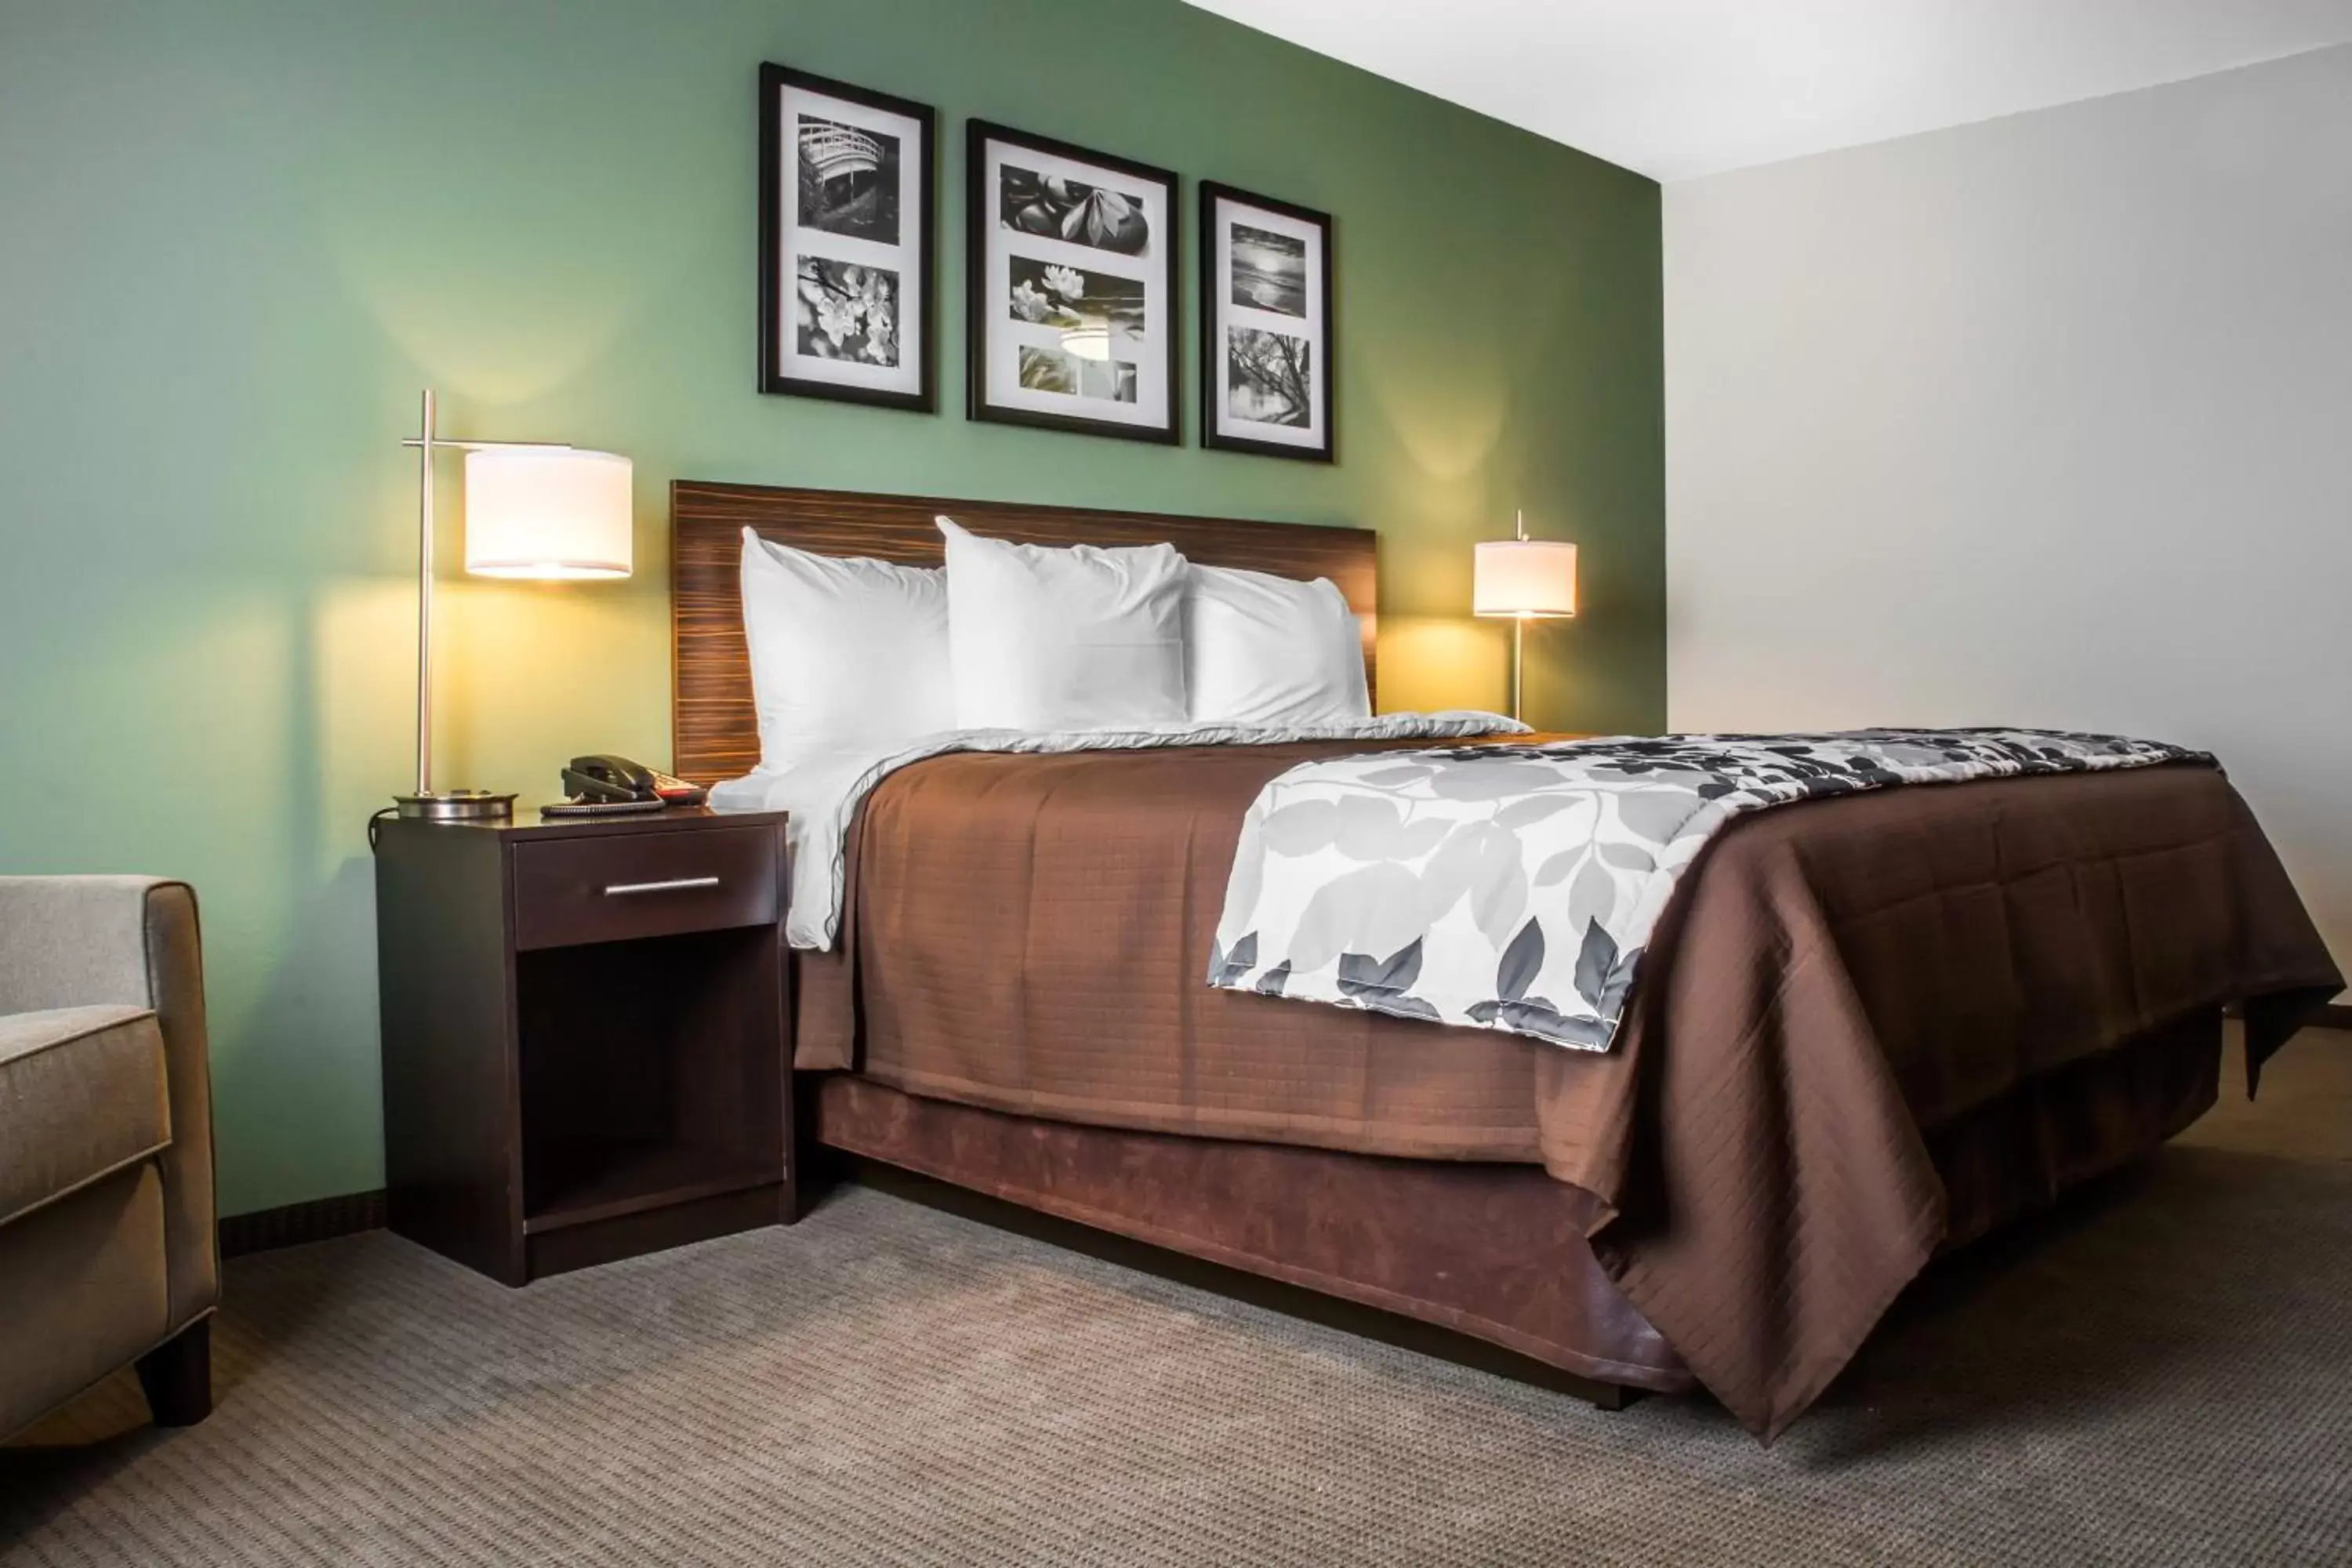 Shower, Room Photo in Sleep Inn & Suites East Syracuse